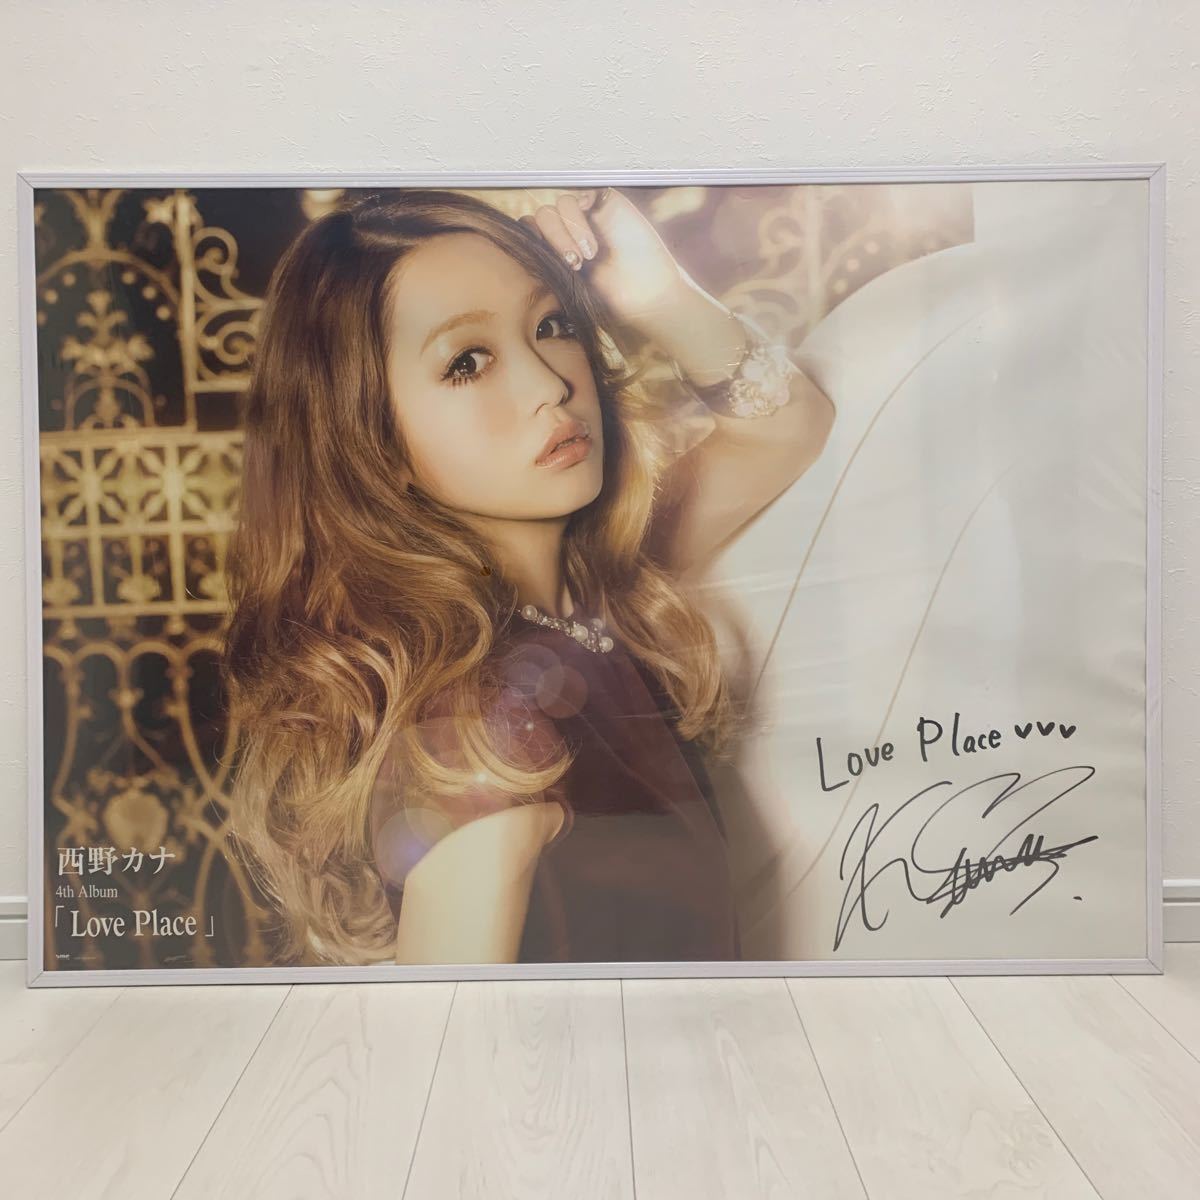  west . kana LOVE Place autograph autograph album present selection big poster B1 size postage included 